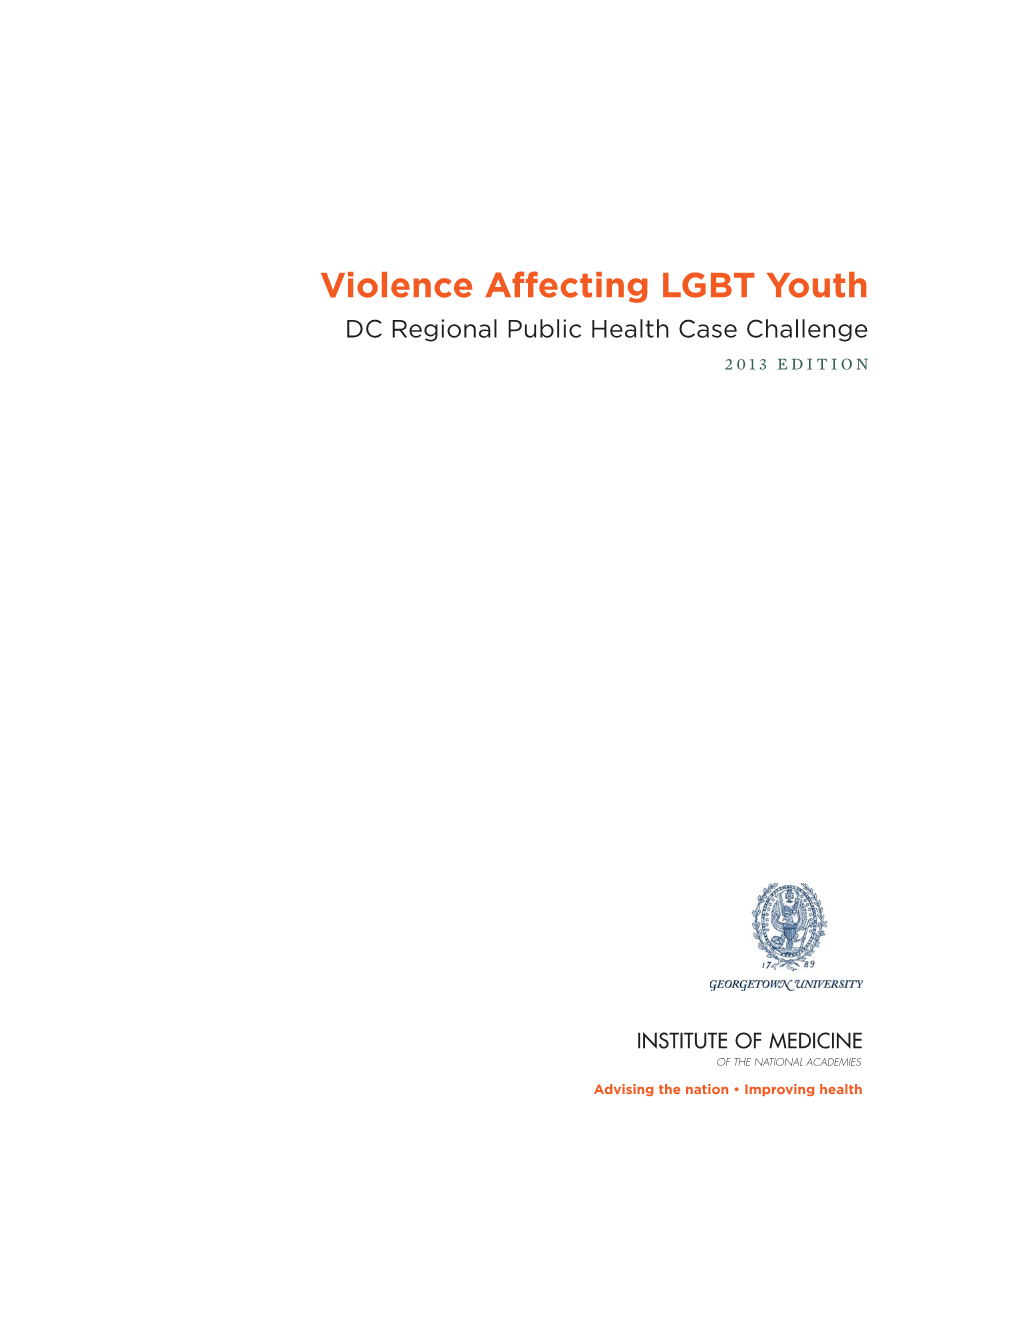 Violence Affecting LGBT Youth DC Regional Public Health Case Challenge 2013 EDITION DC REGIONAL PUBLIC HEALTH CASE CHALLENGE - 2013 EDITION Contents